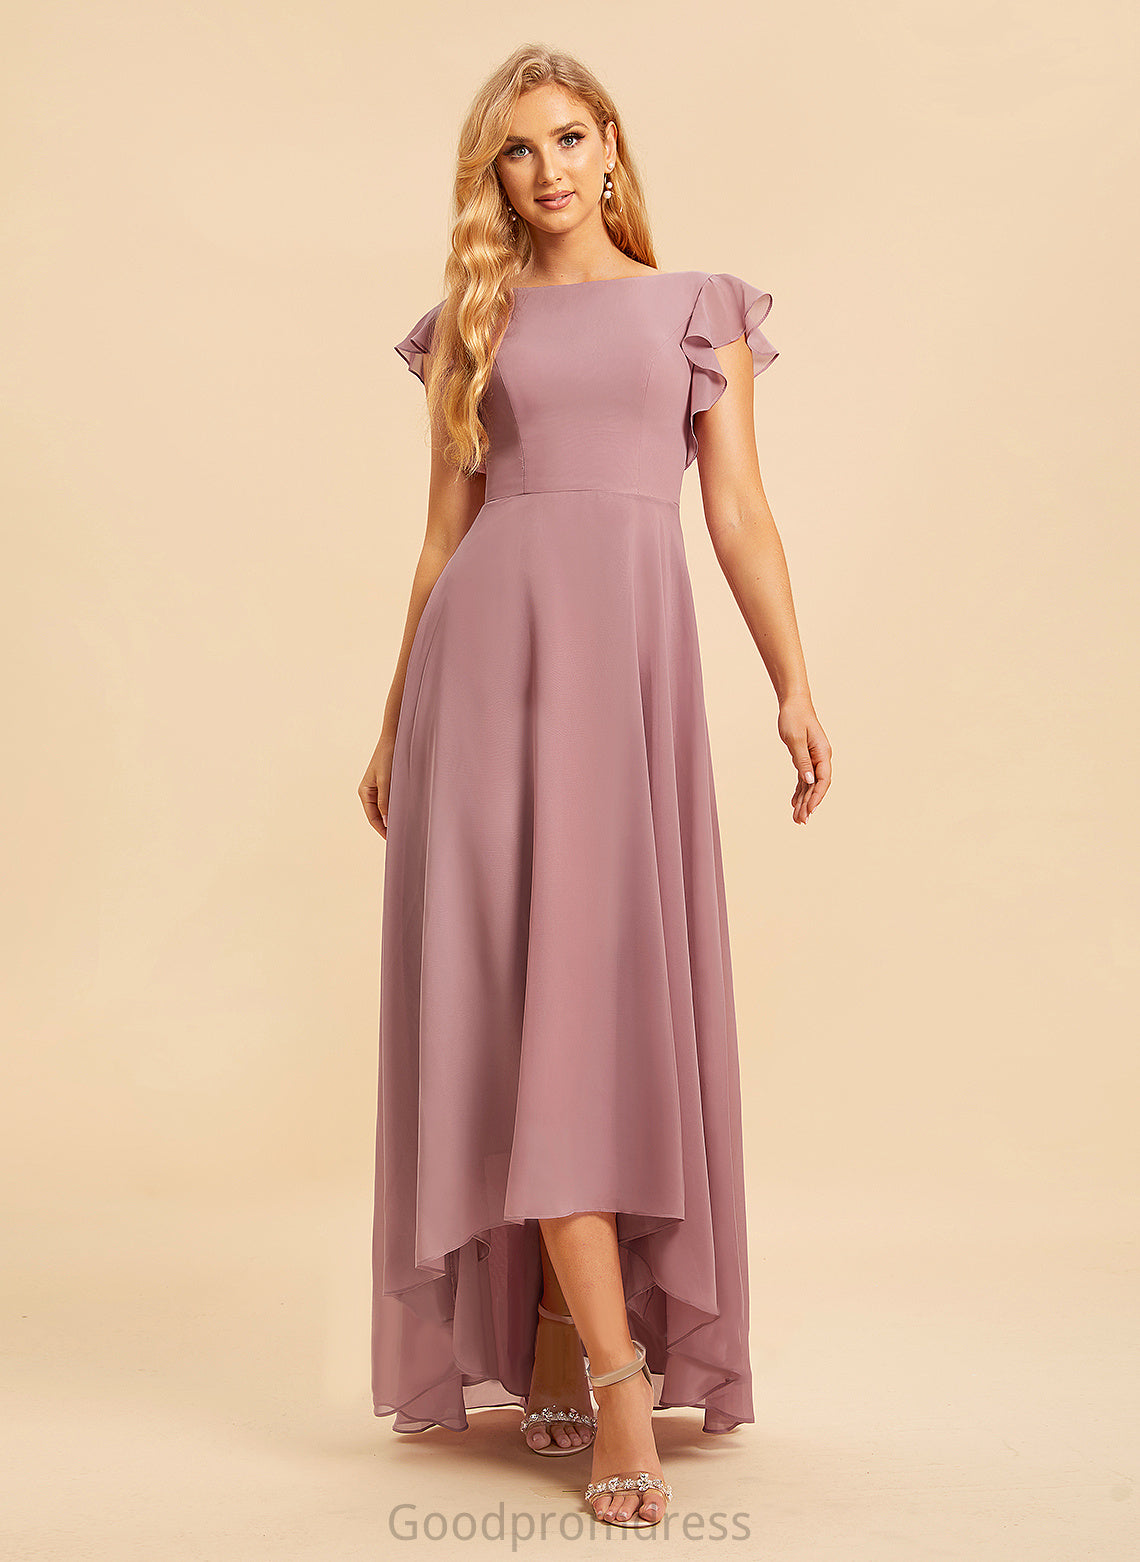 Embellishment Length Neckline Ruffle ScoopNeck A-Line Asymmetrical Fabric Silhouette Lauren Straps Floor Length Bridesmaid Dresses